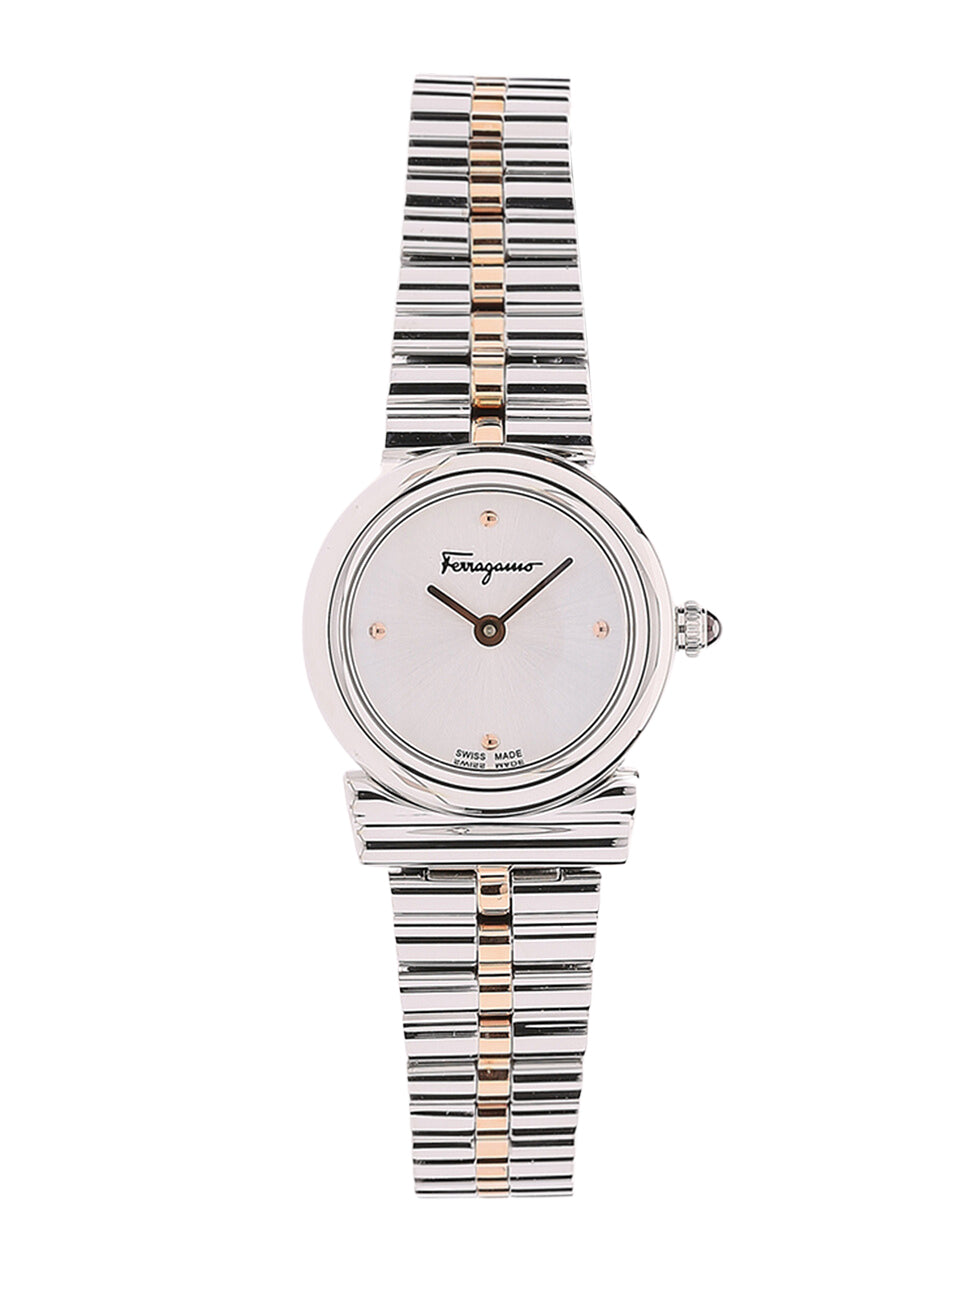 Ferragamo Women's Gancini Horizontal Watch White/Silver/Gold SFMC00221